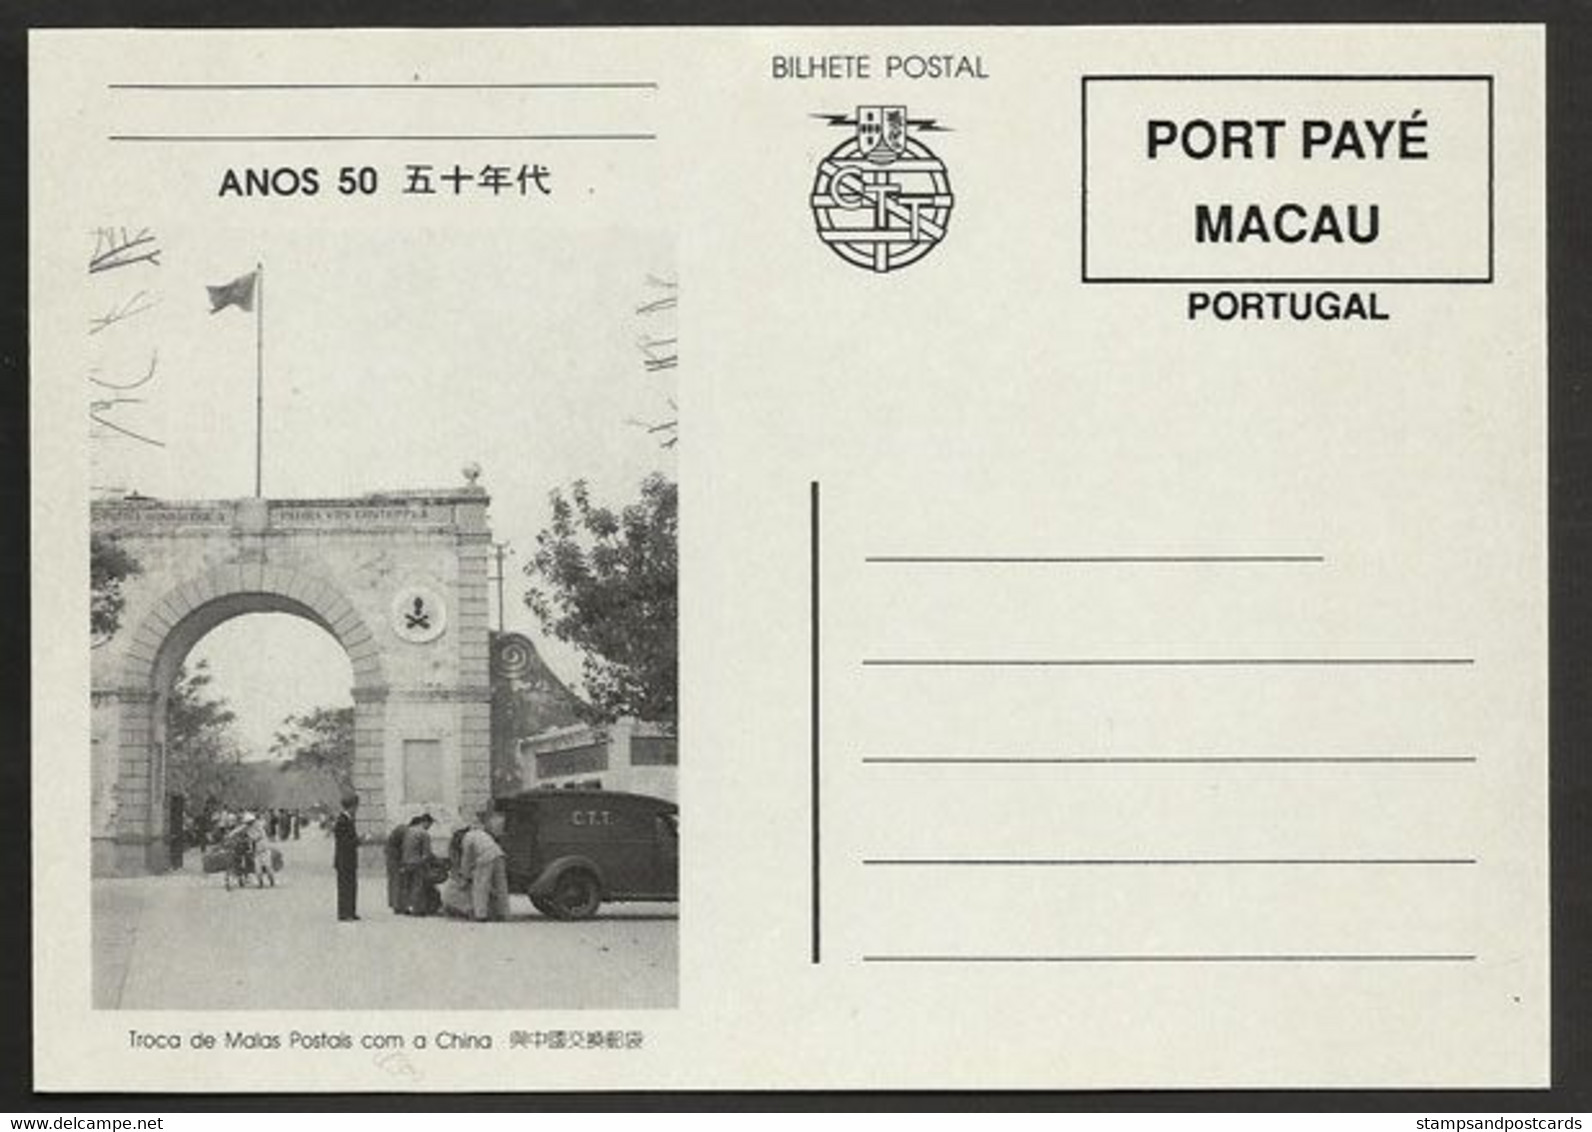 Macau Portugal Entier Postal échange Des Sacs Postaux Avec Chine C. 1990 Macao Stationery Exchanging Mail Bags W/ China - Postal Stationery